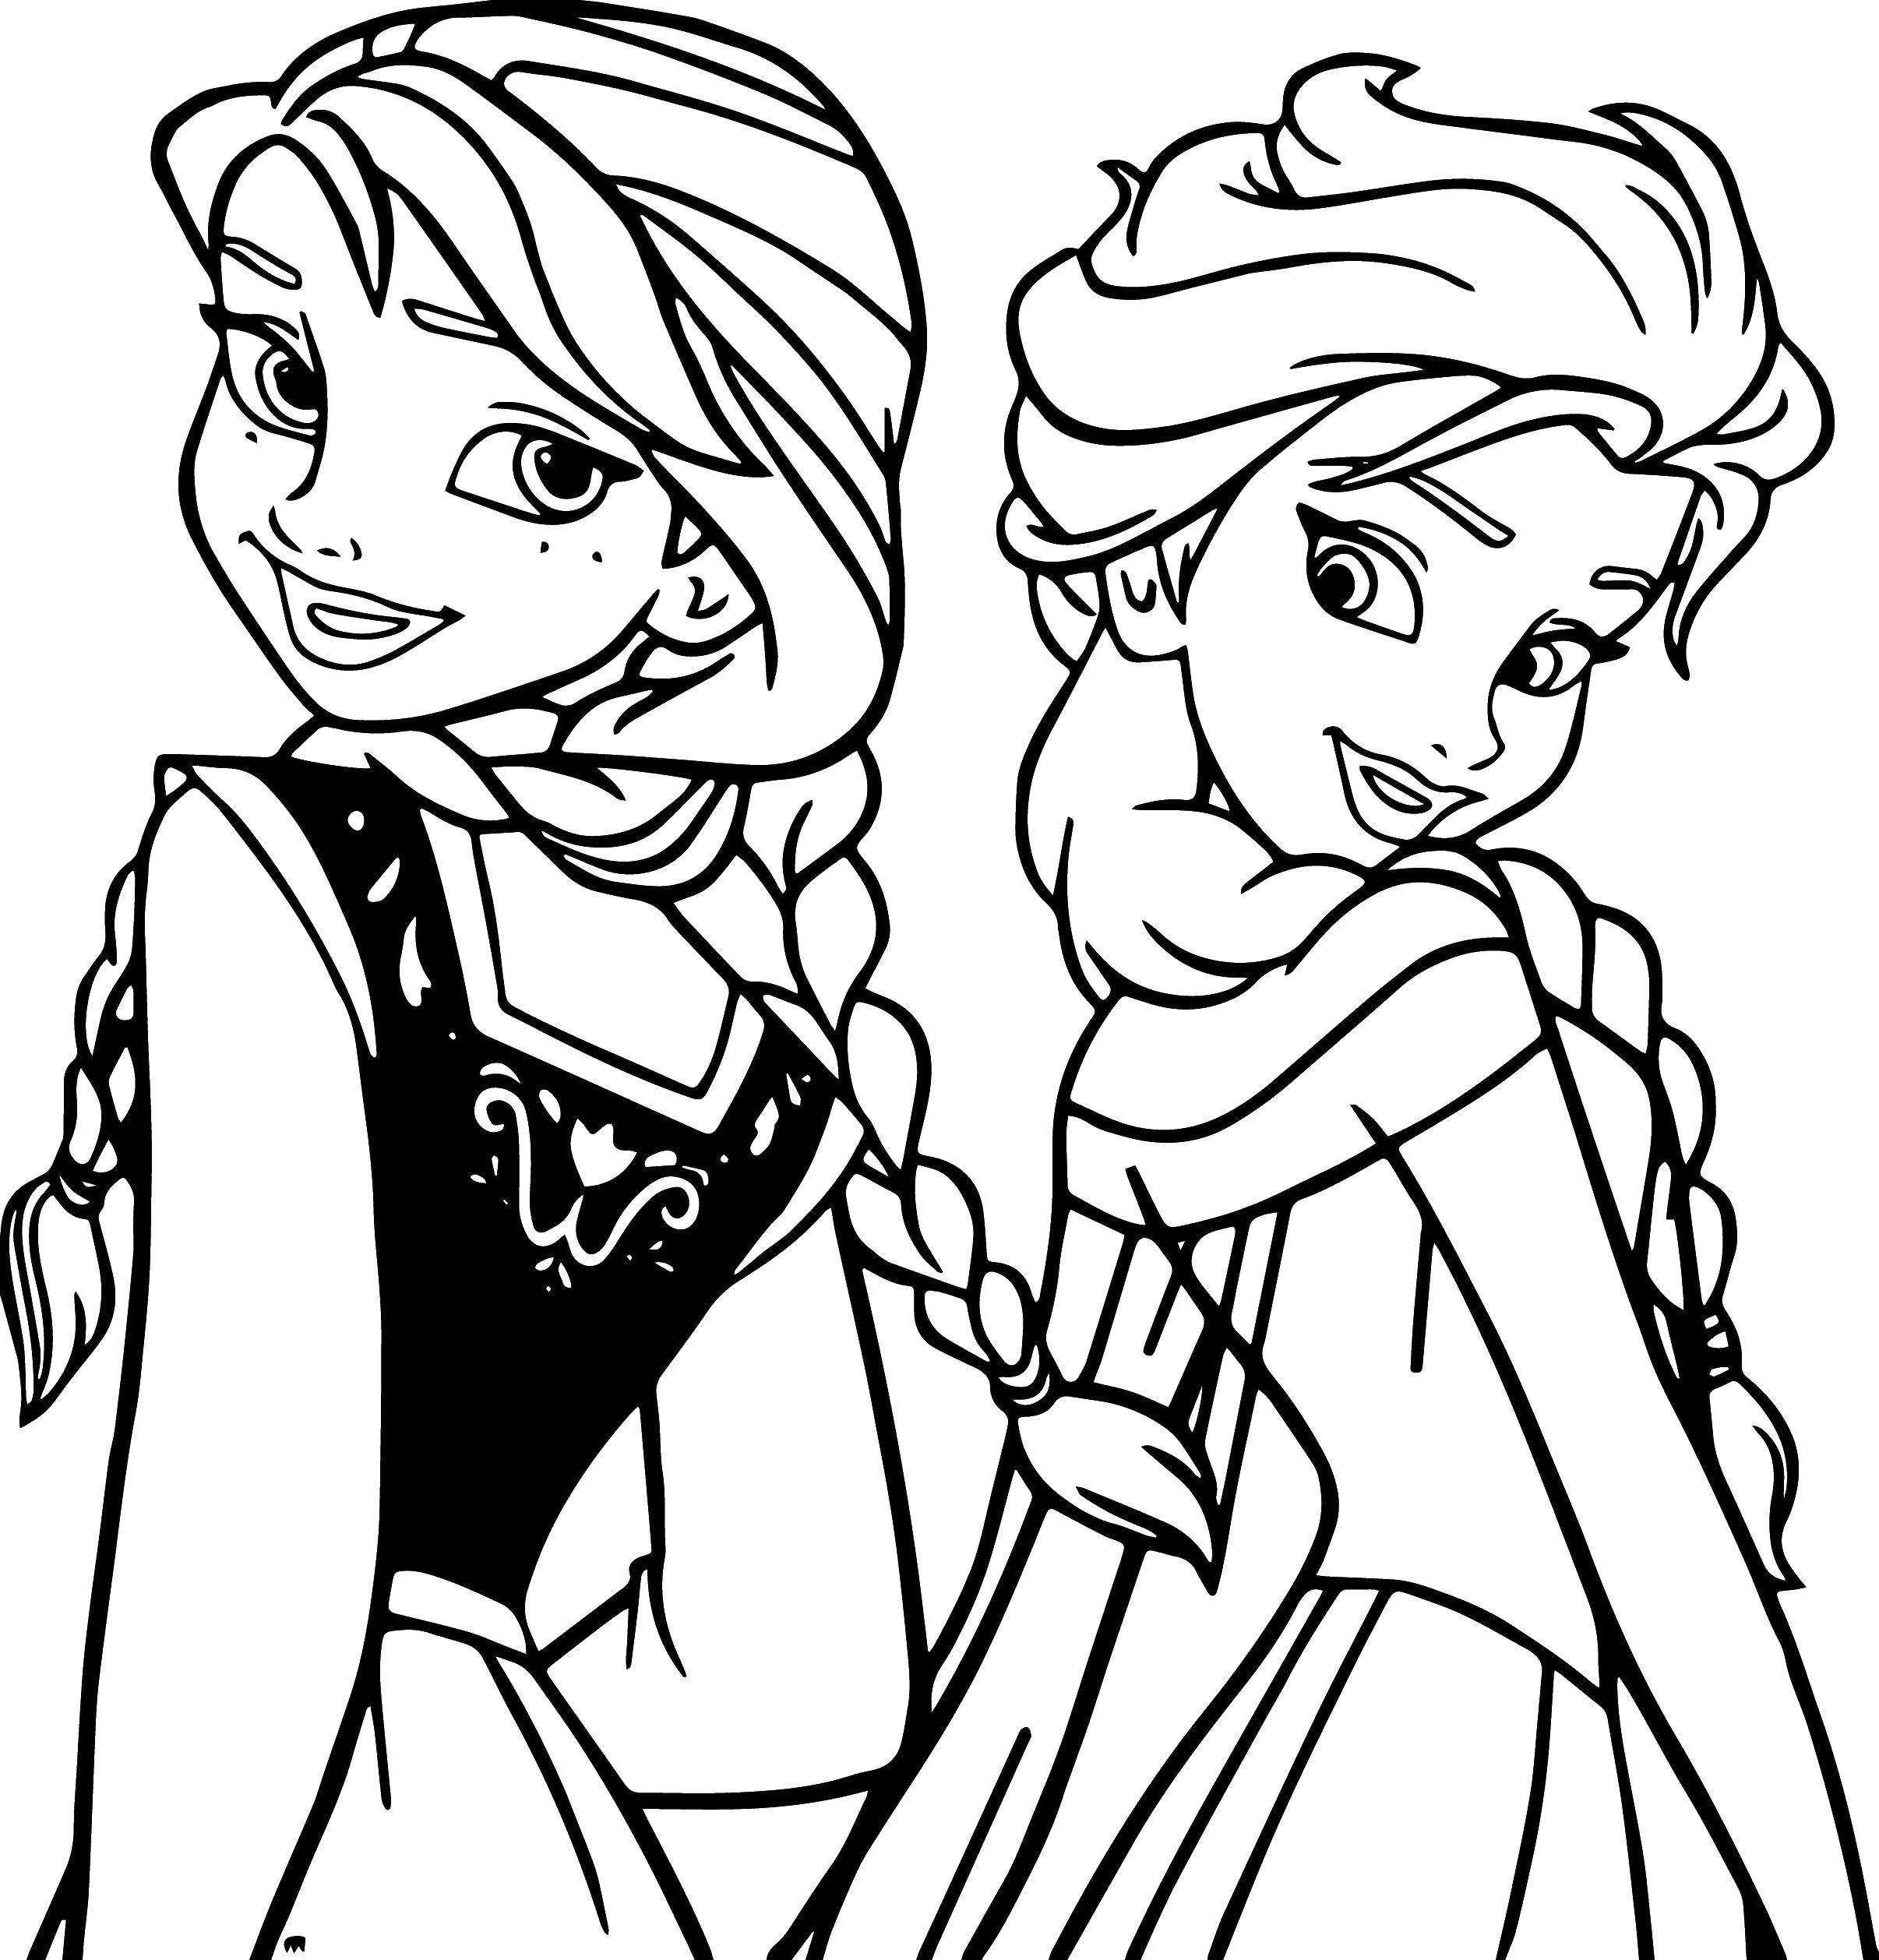 Coloring Cartoon characters cold heart . Category cartoons. Tags:  Disney, Elsa, frozen, Princess.